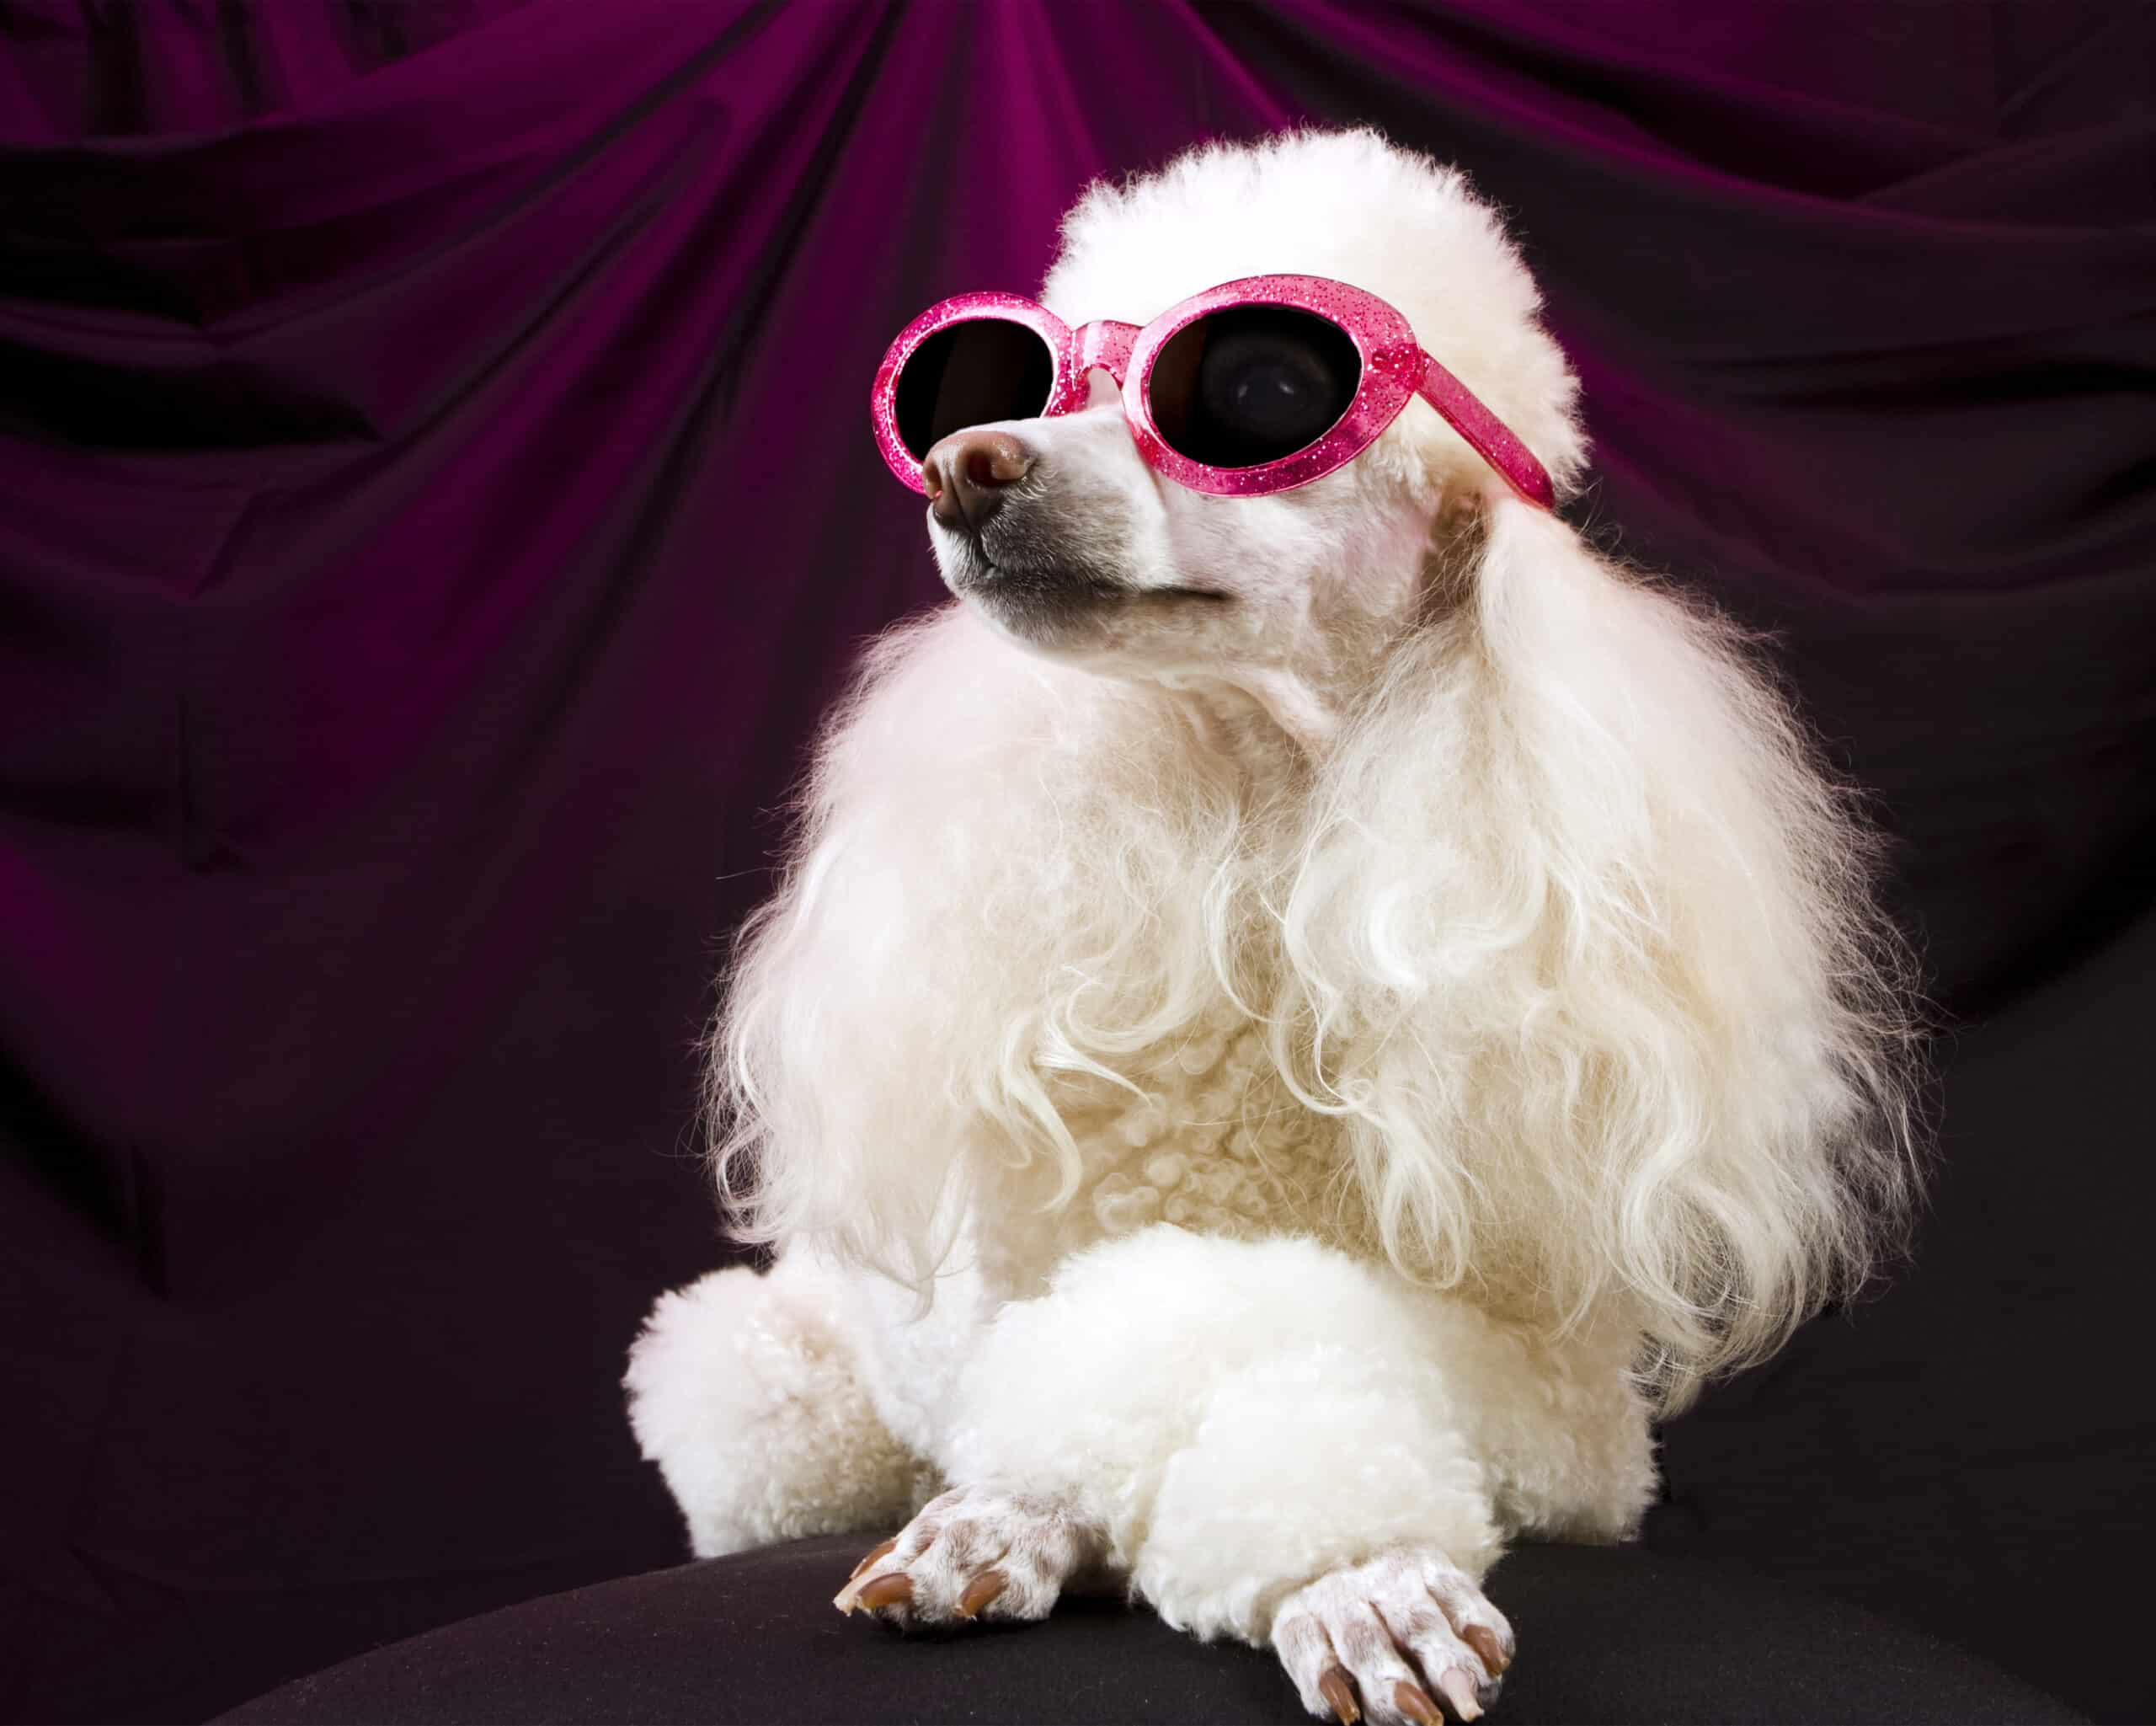 Movie Star Poodle Striking a Pose